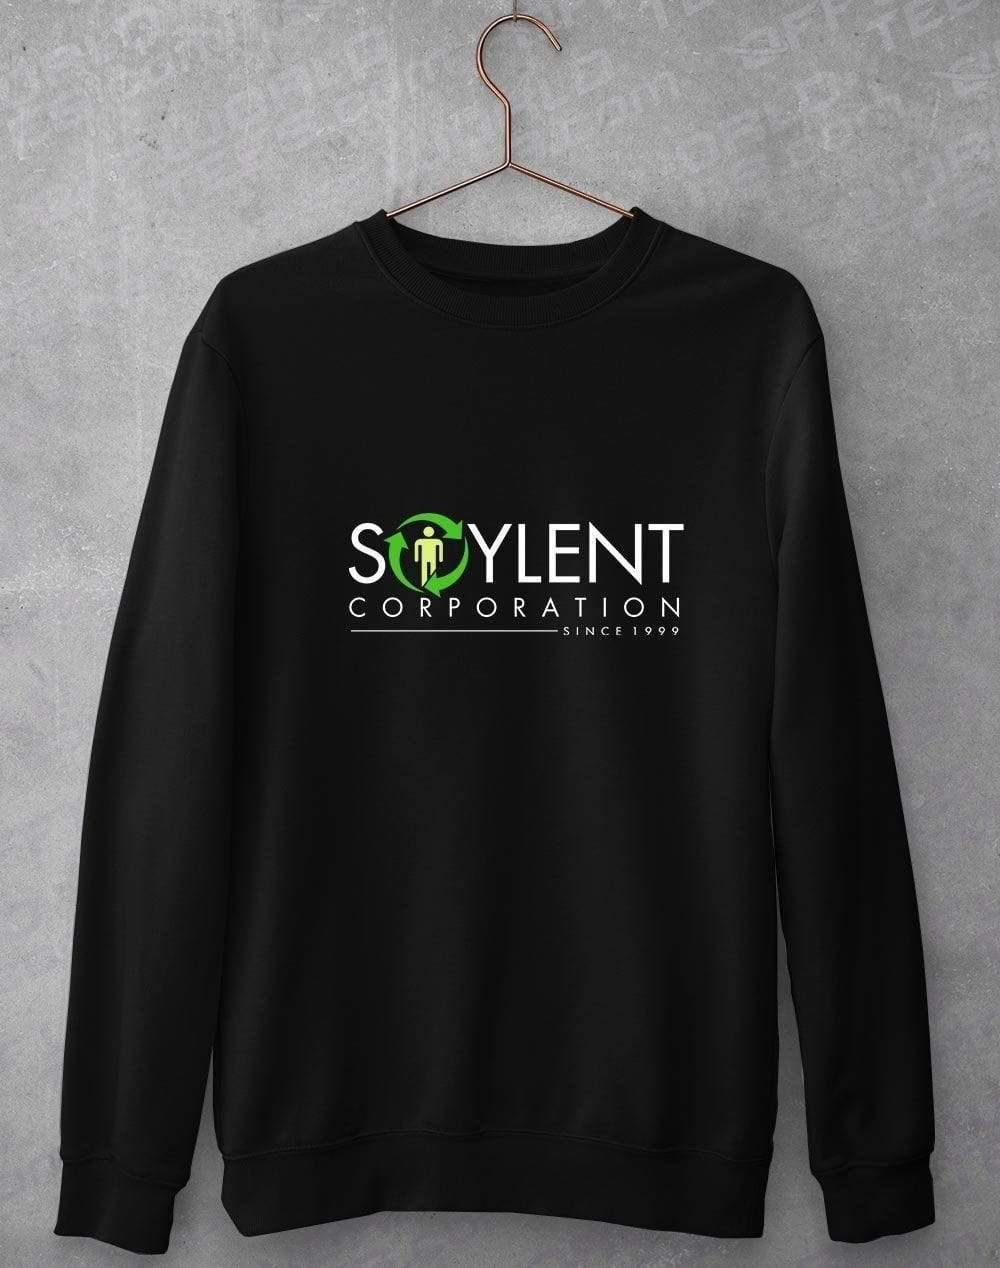 Soylent Corporation Sweatshirt S / Black  - Off World Tees